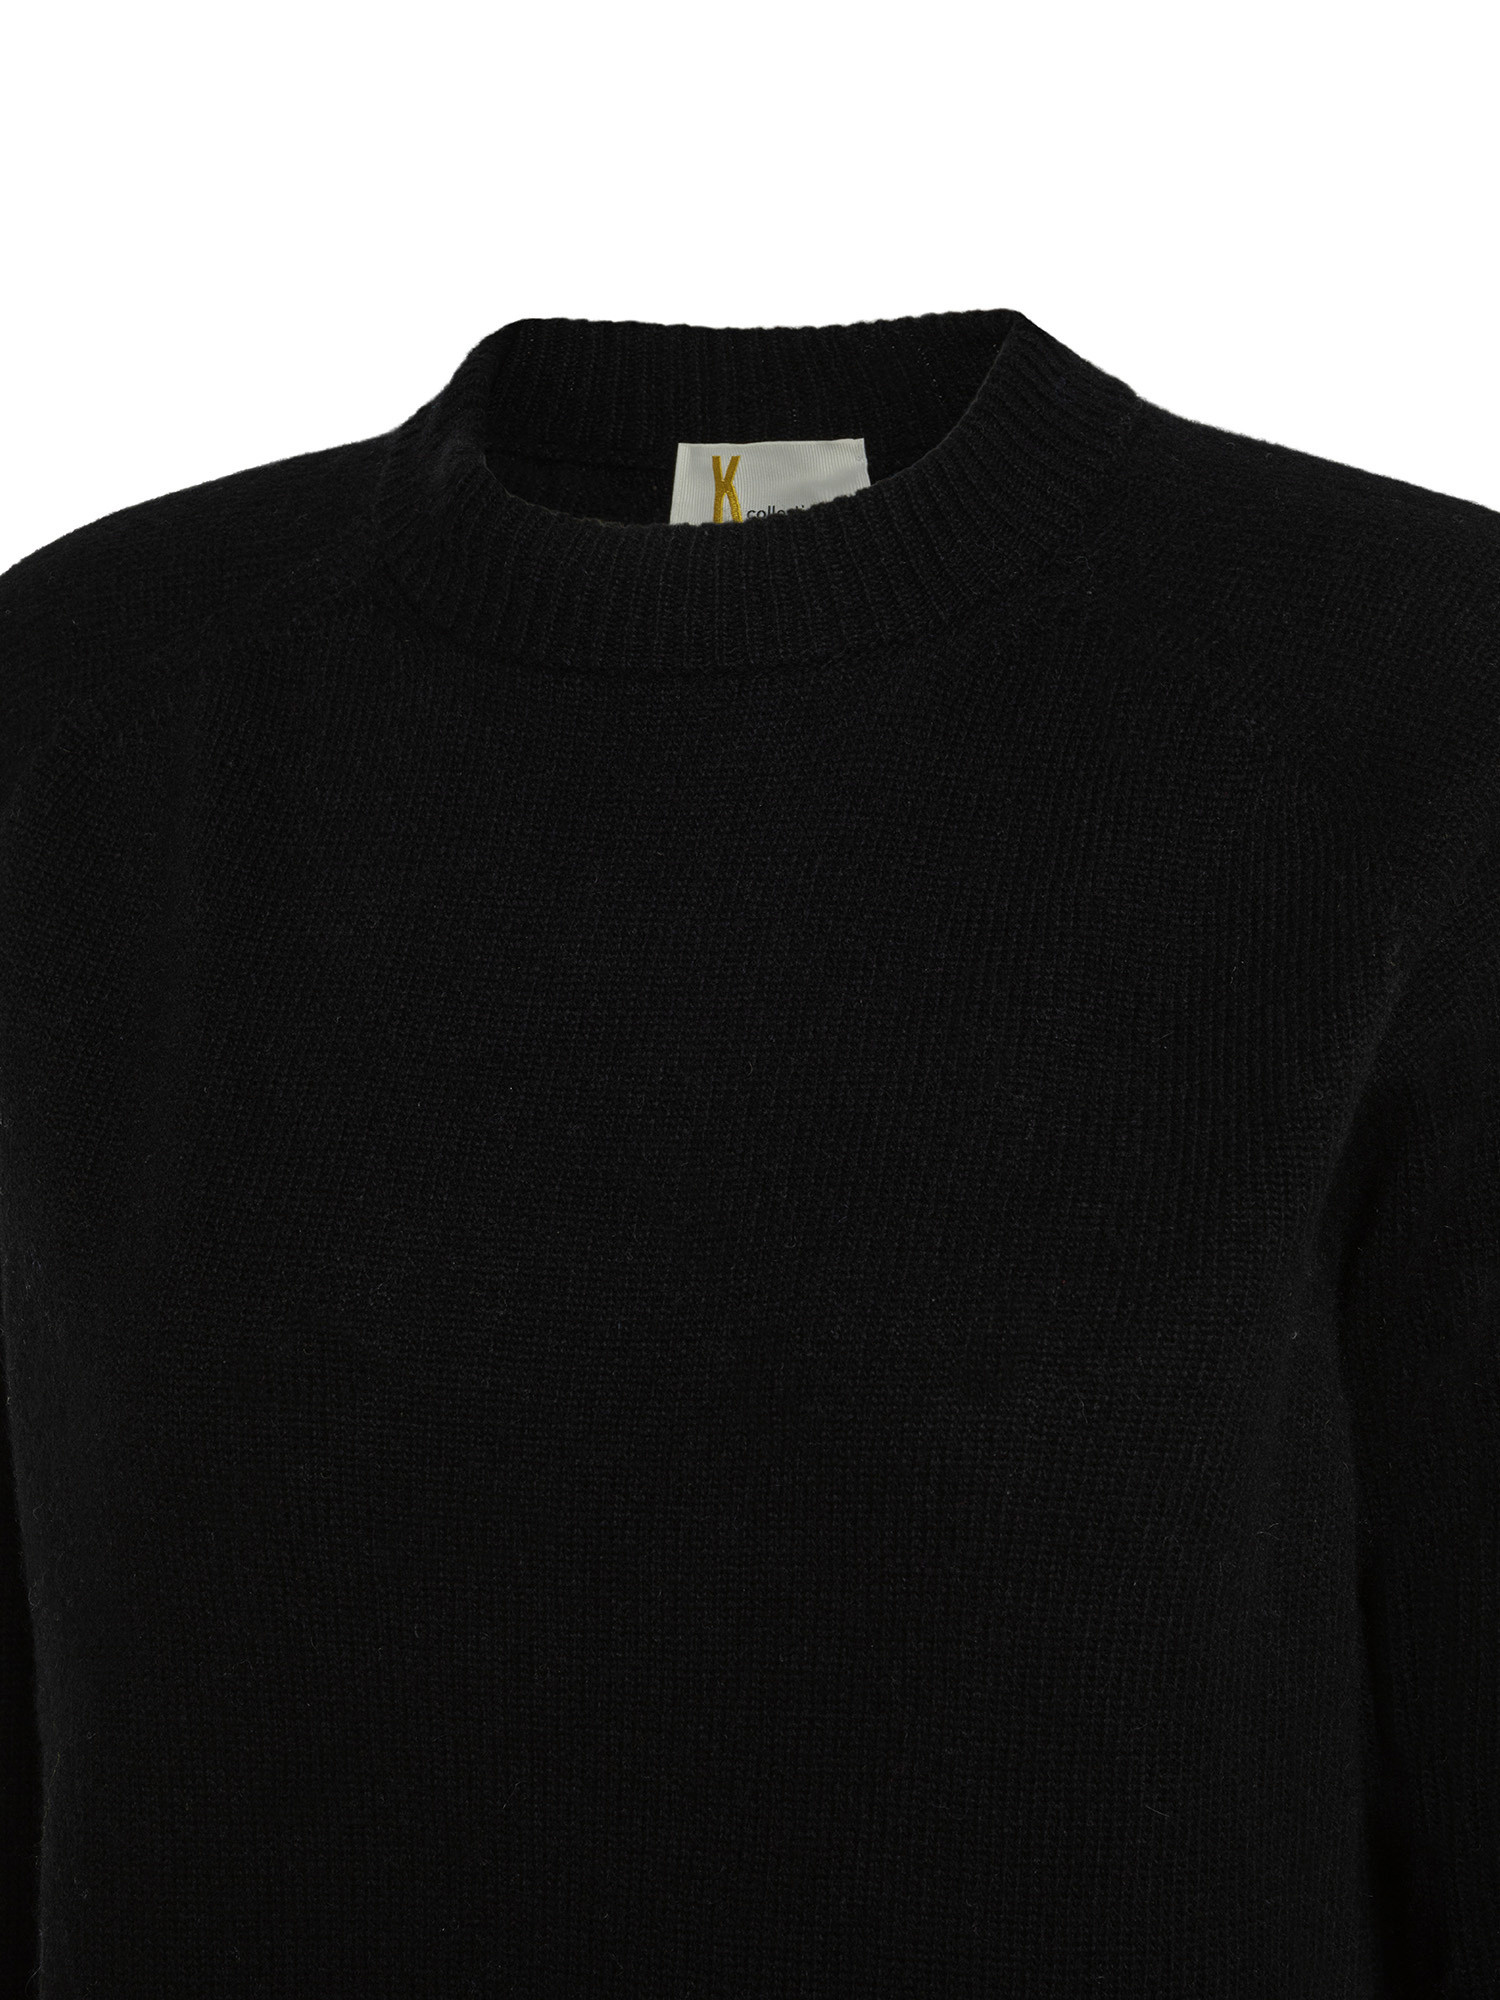 K Collection - Crewneck sweater, Black, large image number 2